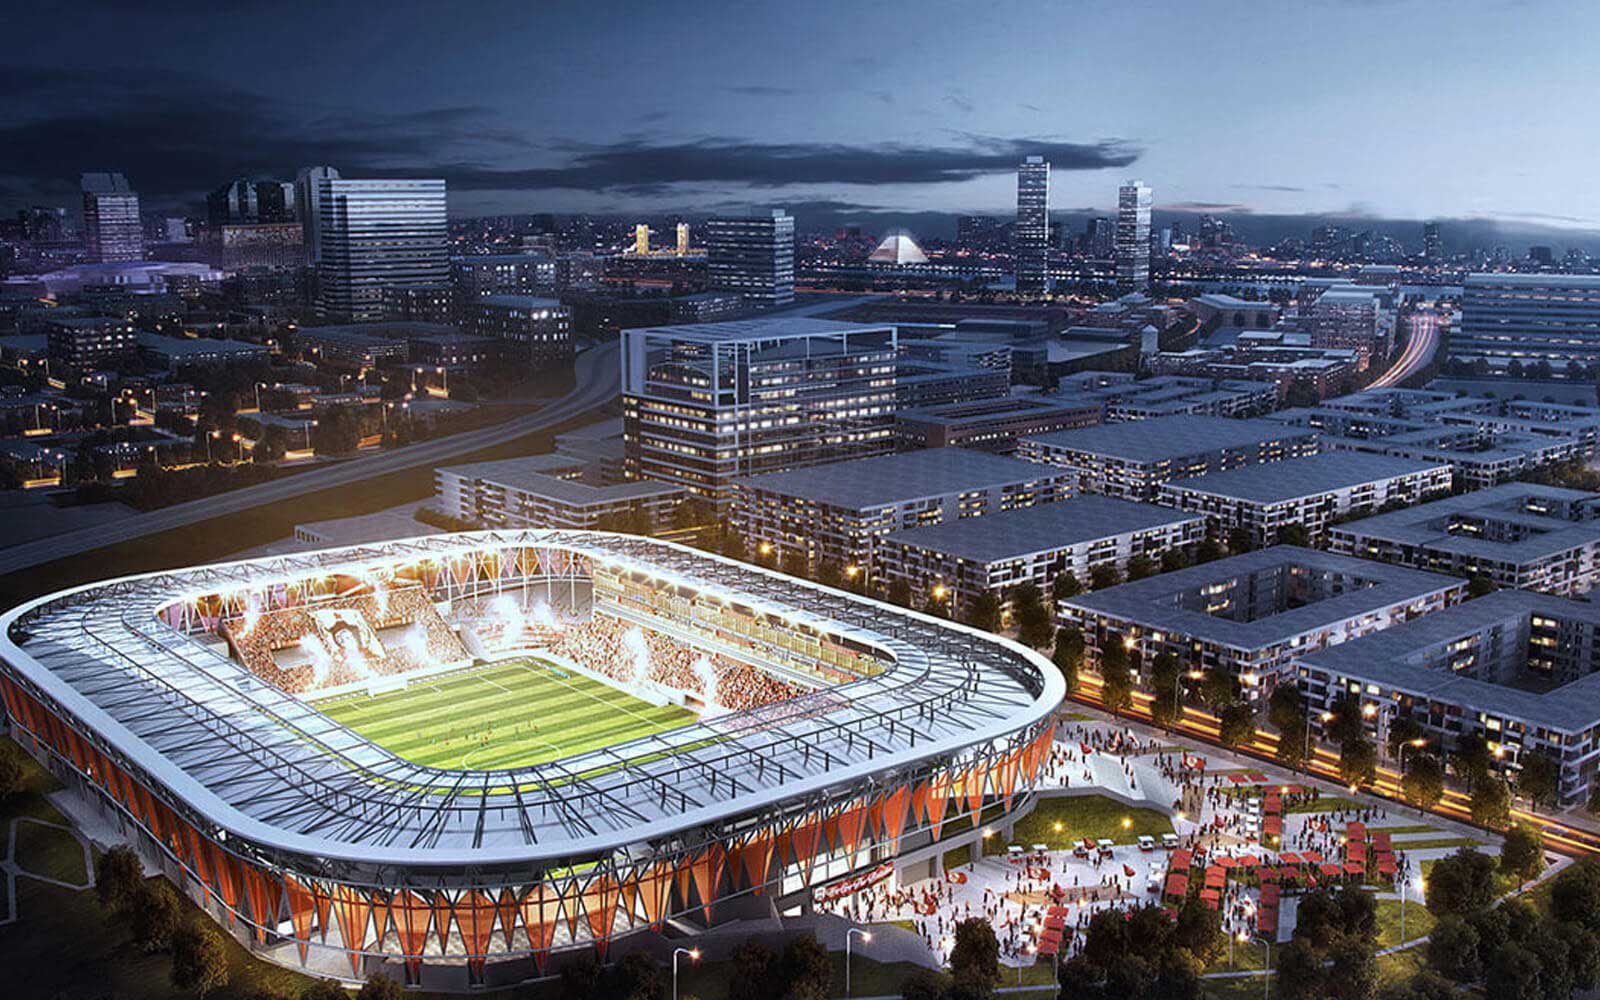 MLS Stadium | The Railyards